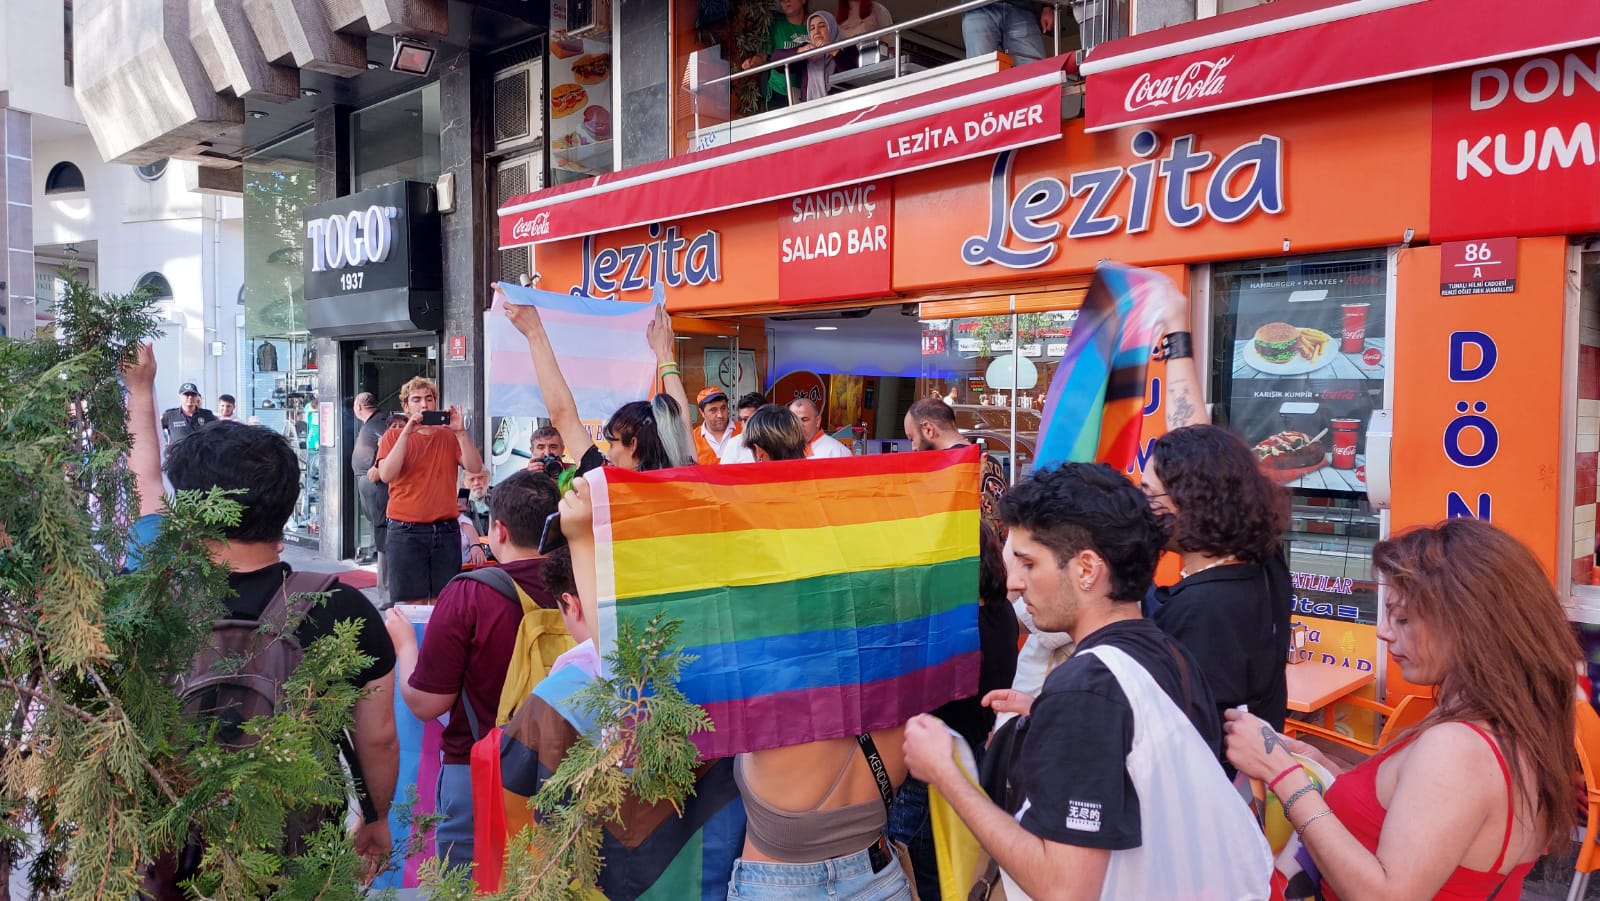 The expert report reveals the police torture regarding the Ankara Pride March case! Kaos GL - News Portal for LGBTI+